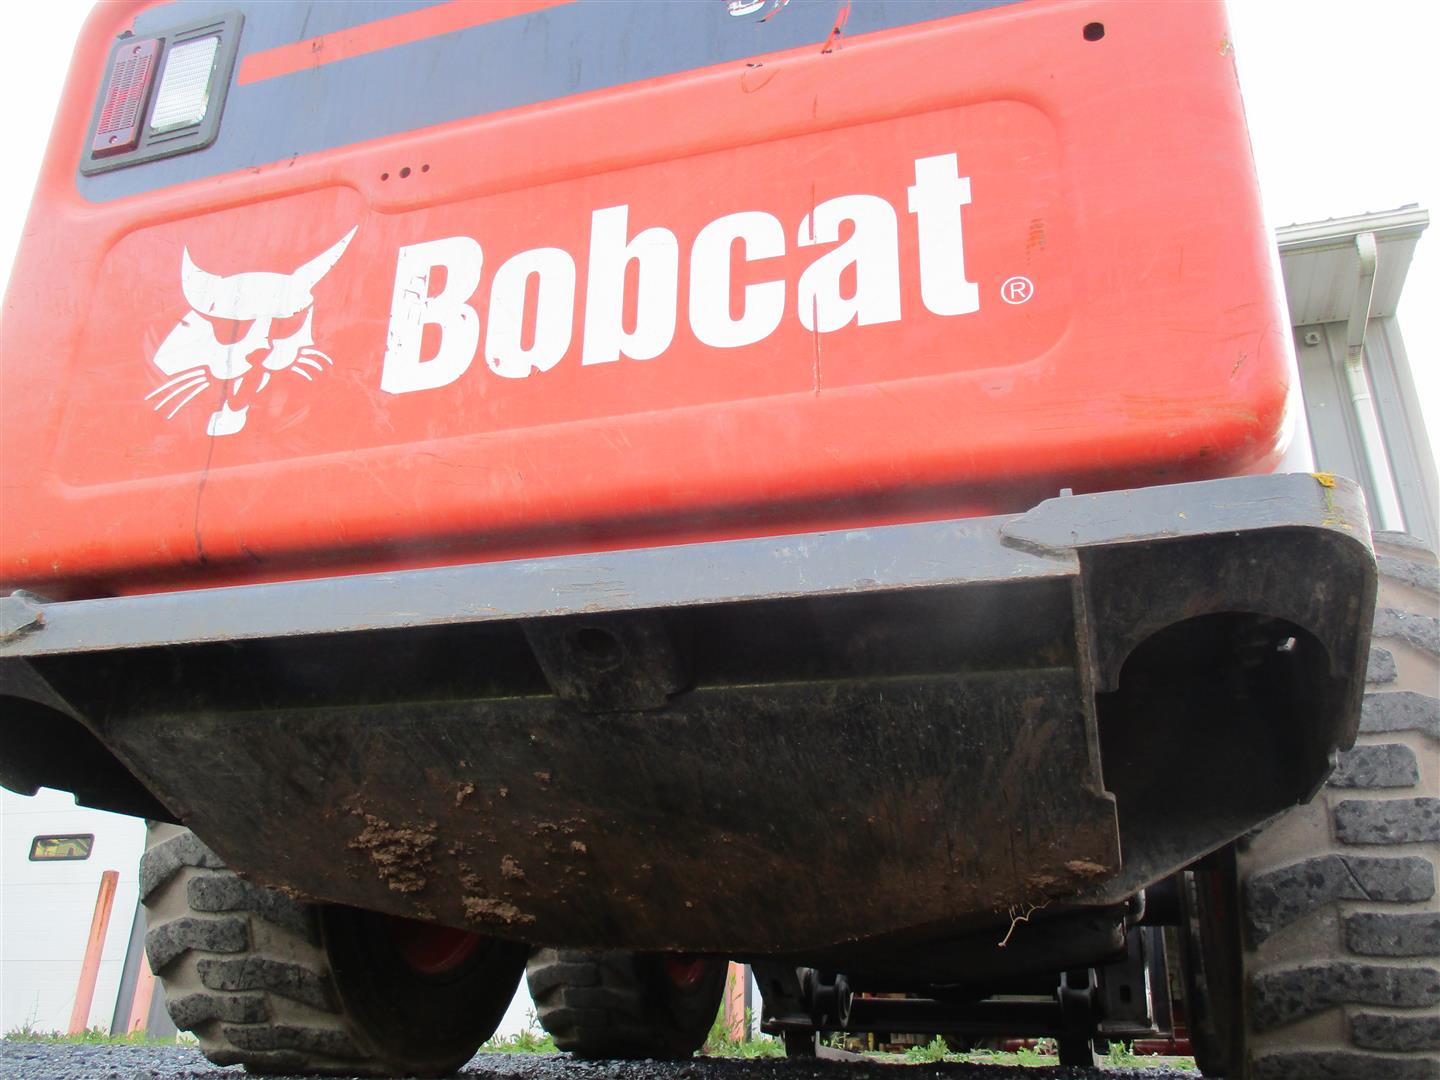 Bobcat S750